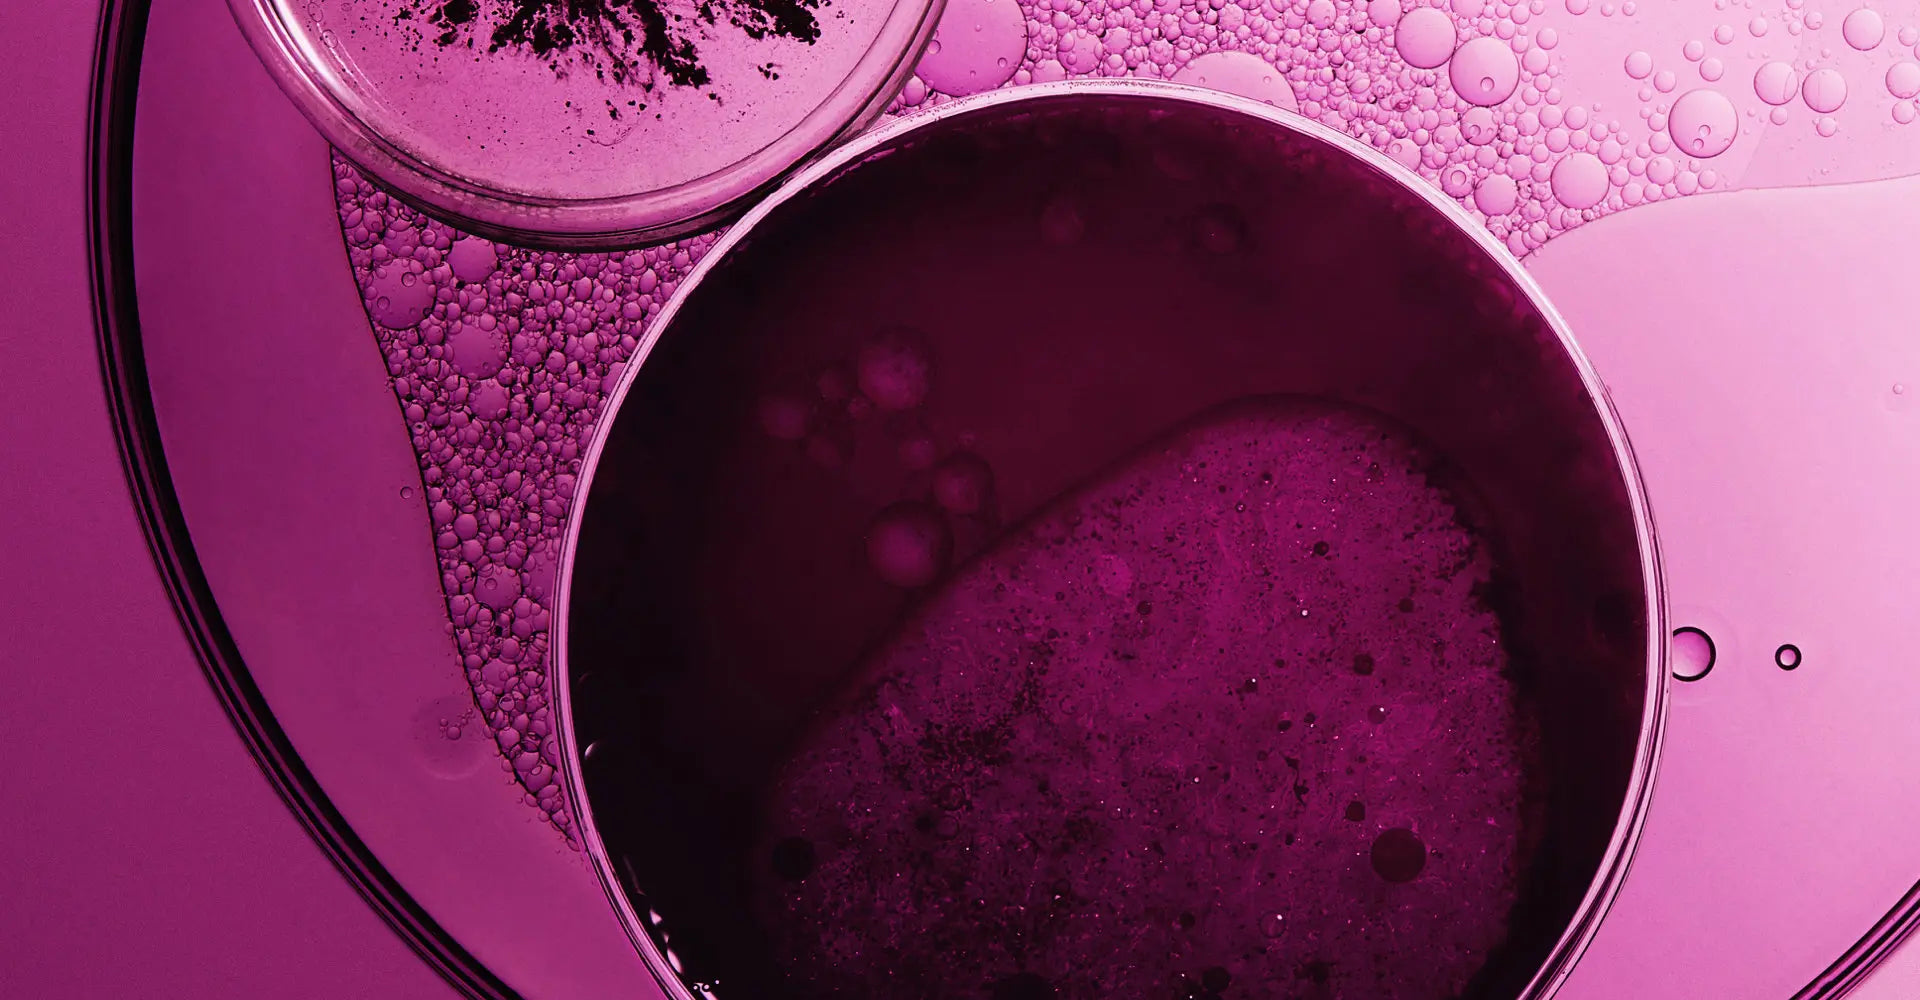 A petri dish with a purple liquid in it